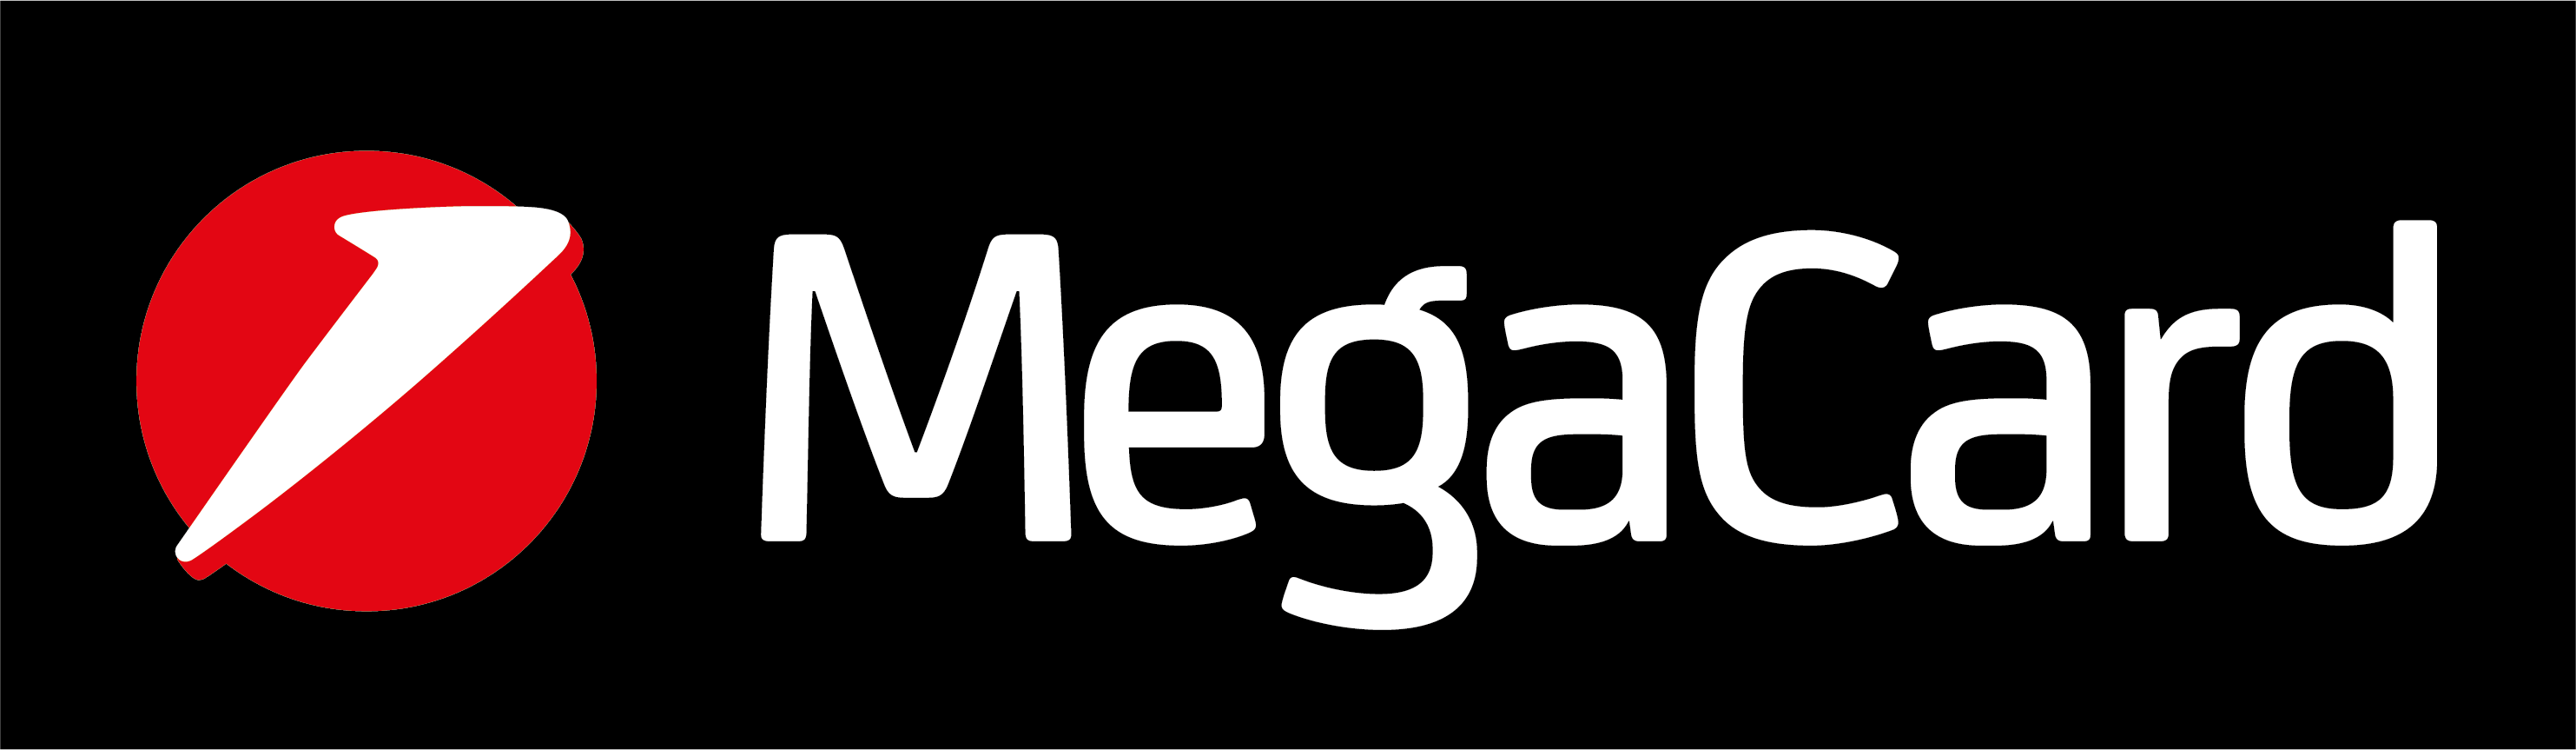 MegaCard